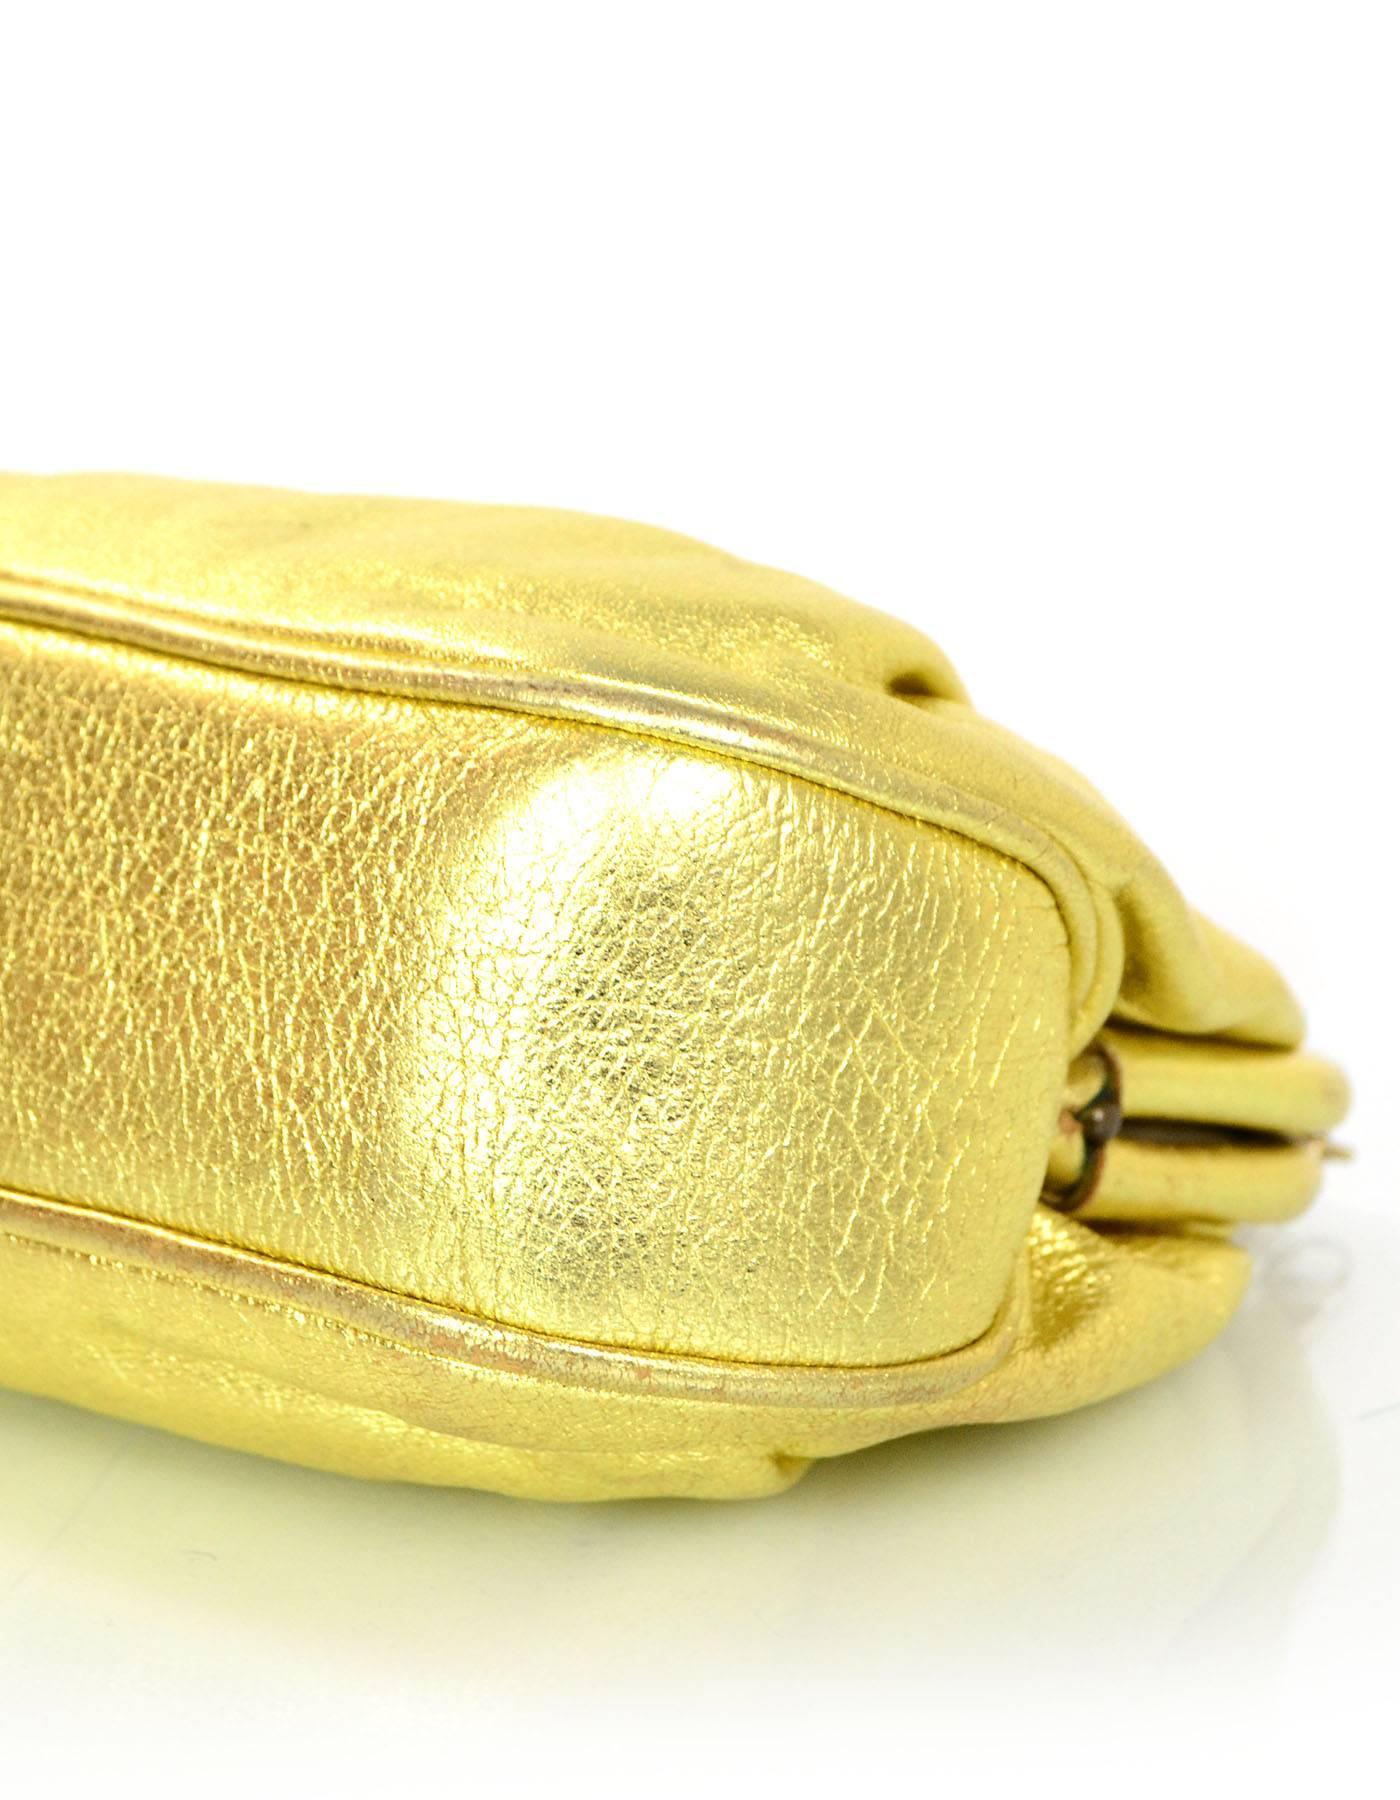 Chanel Metallic Gold Leather Mini Evening Bag GHW 1